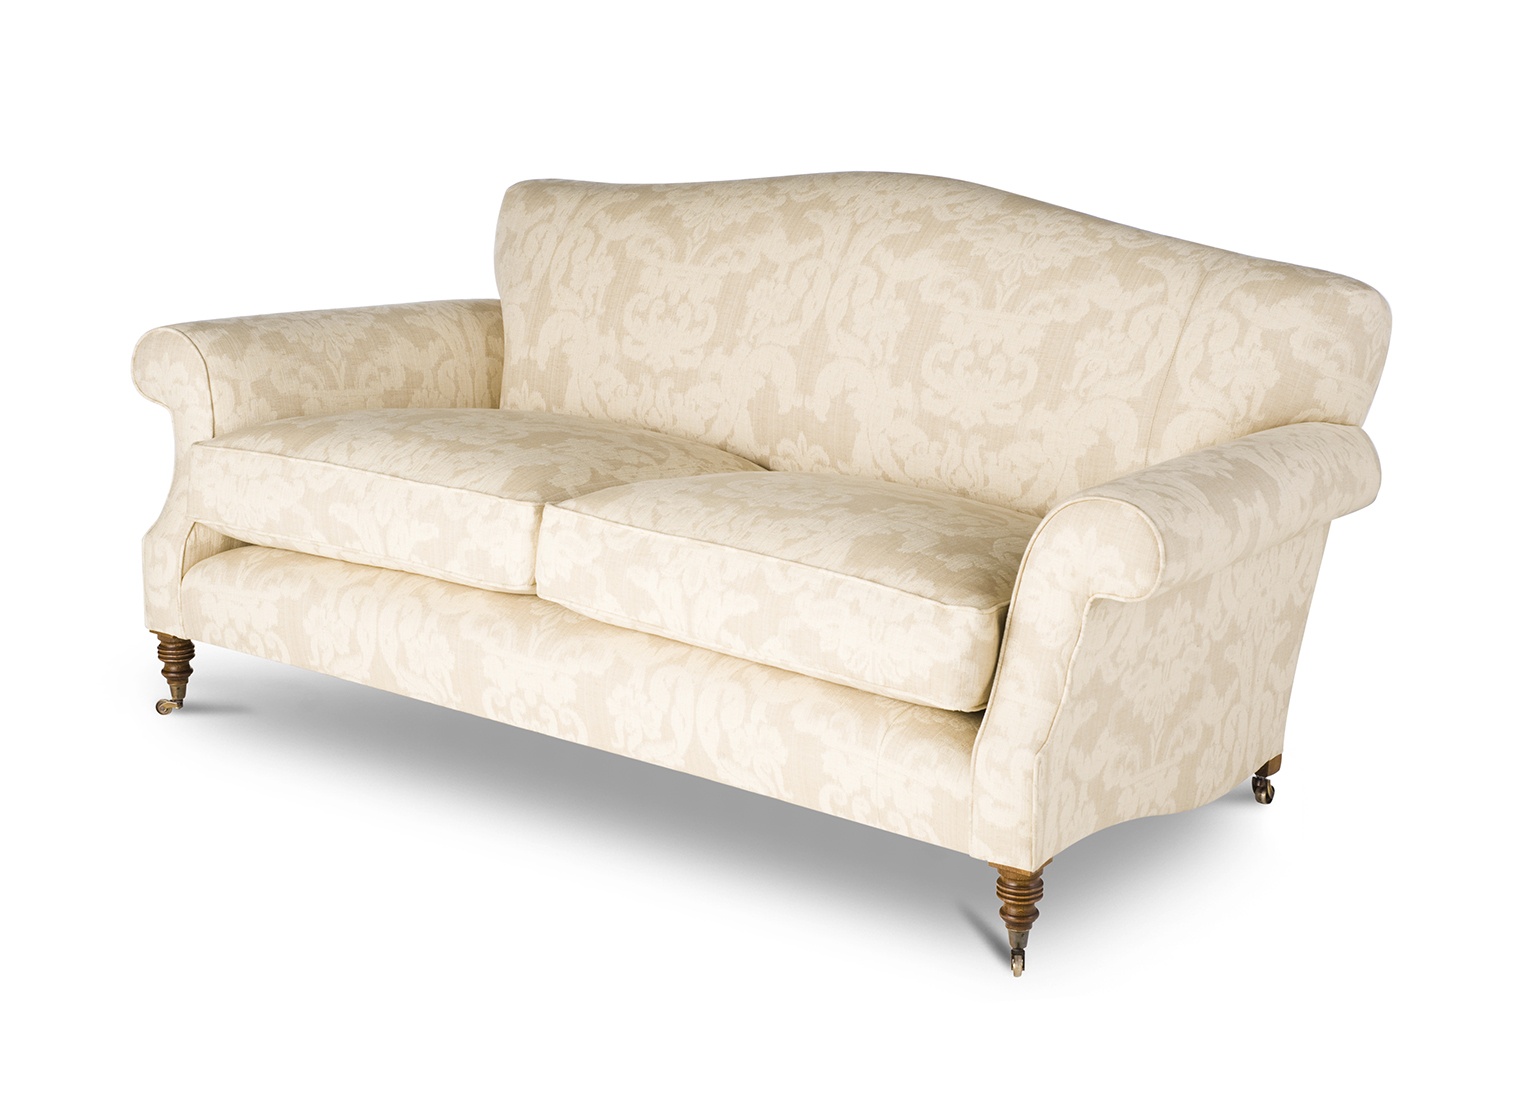 Georgian 2.5 seater sofa in Wicklow damask - Oatmeal - Beaumont & Fletcher